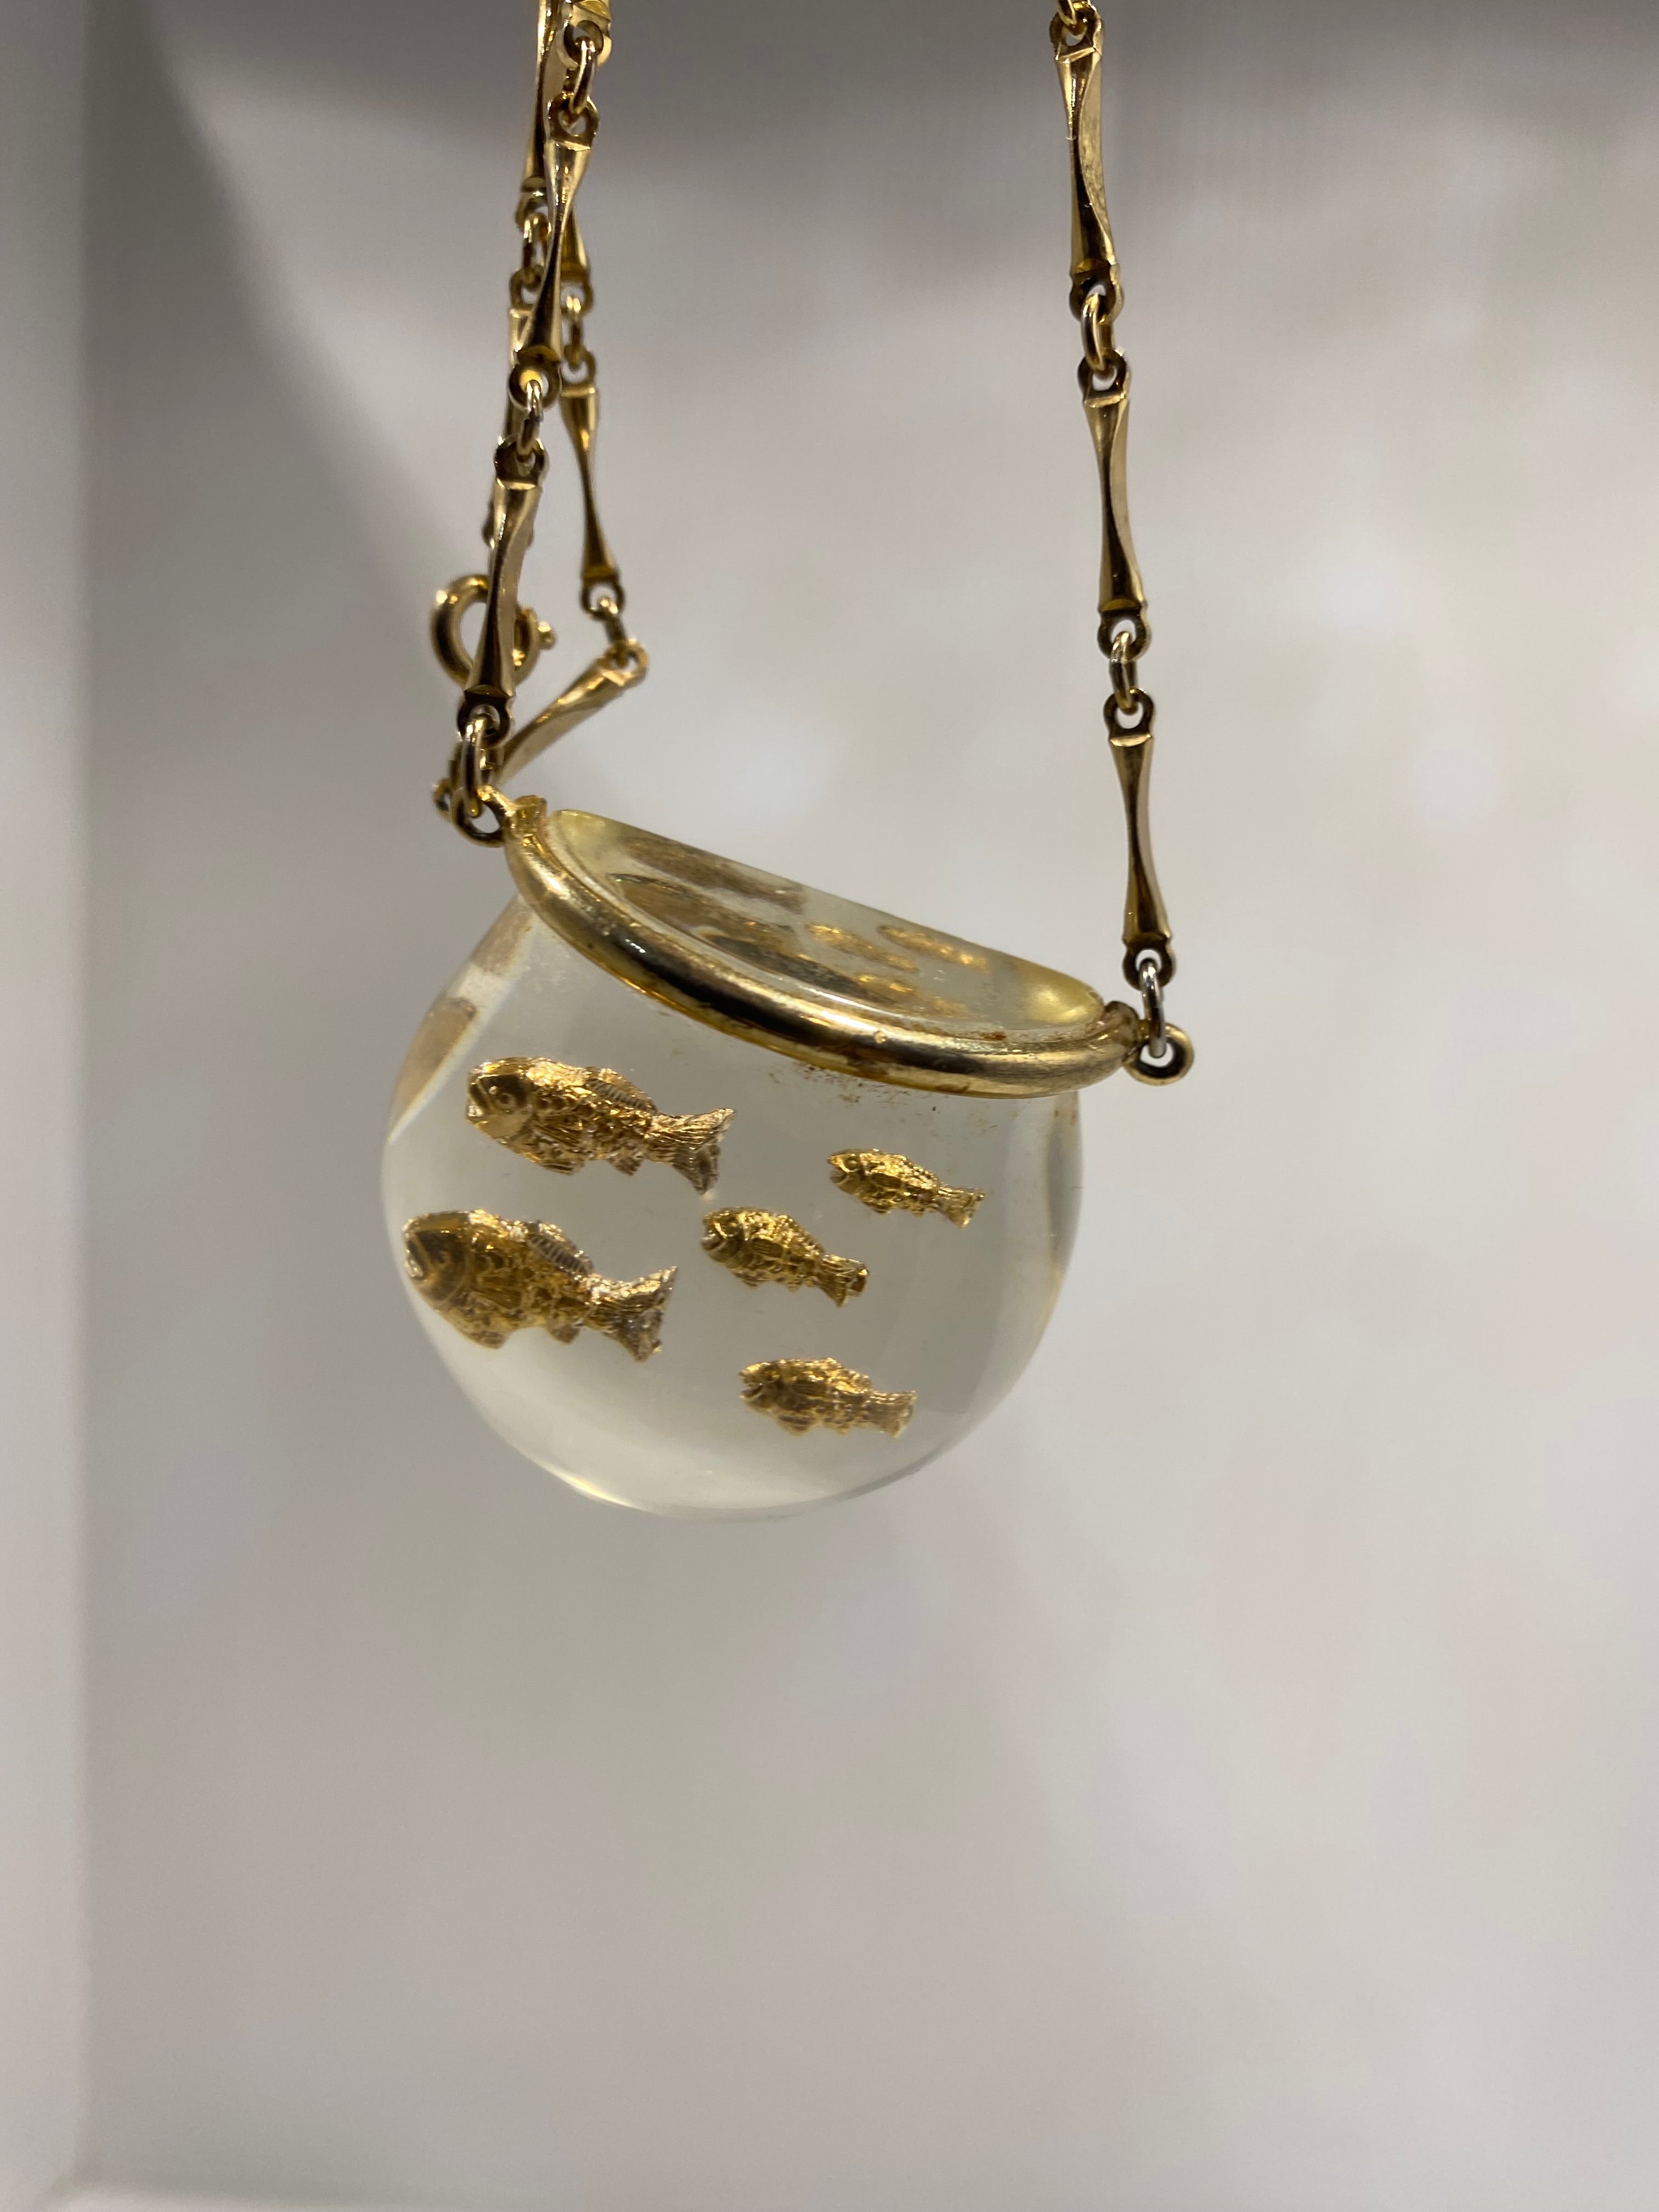 Vintage, funny jewelry necklace aquarium